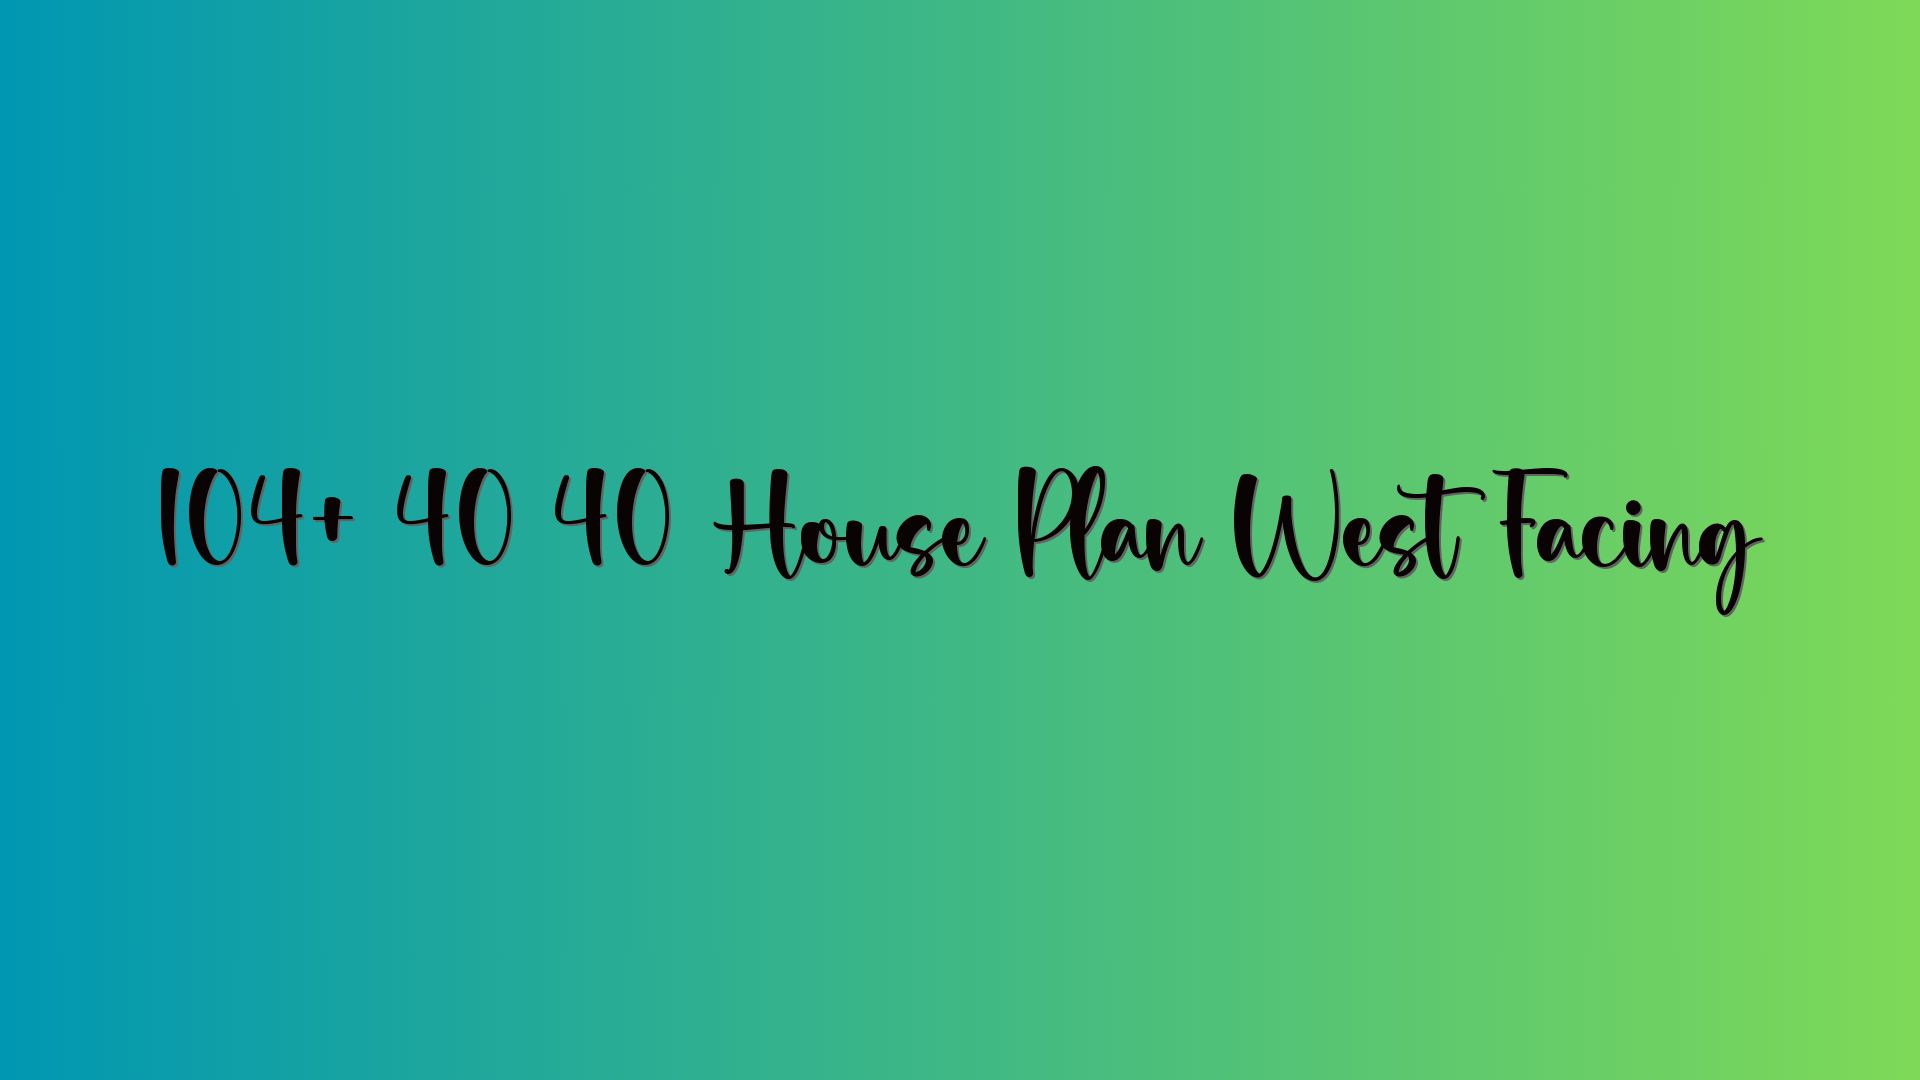 104+ 40 40 House Plan West Facing